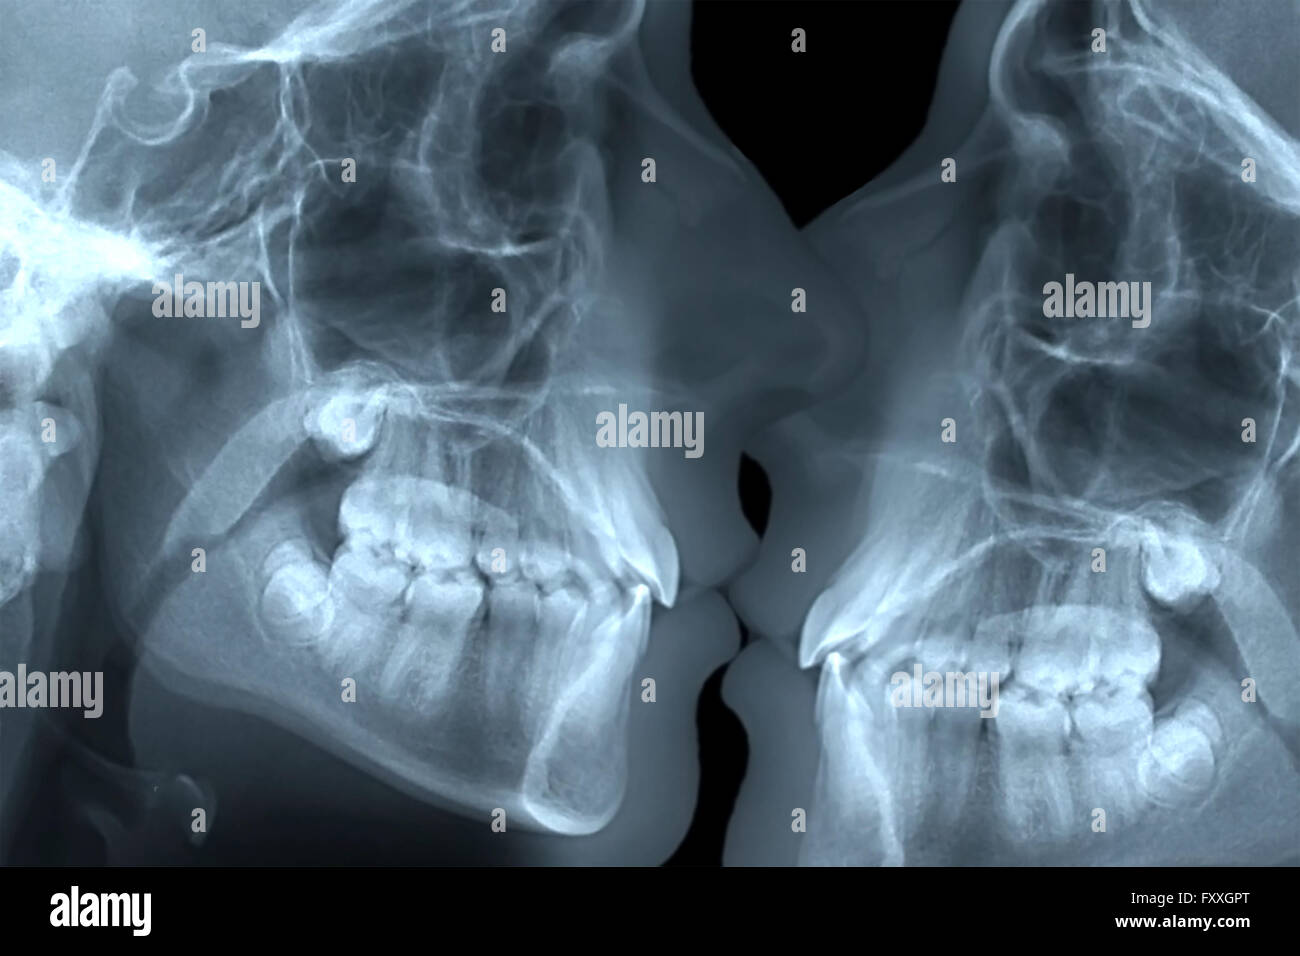 Soins médicaux : x-ray kissing Banque D'Images